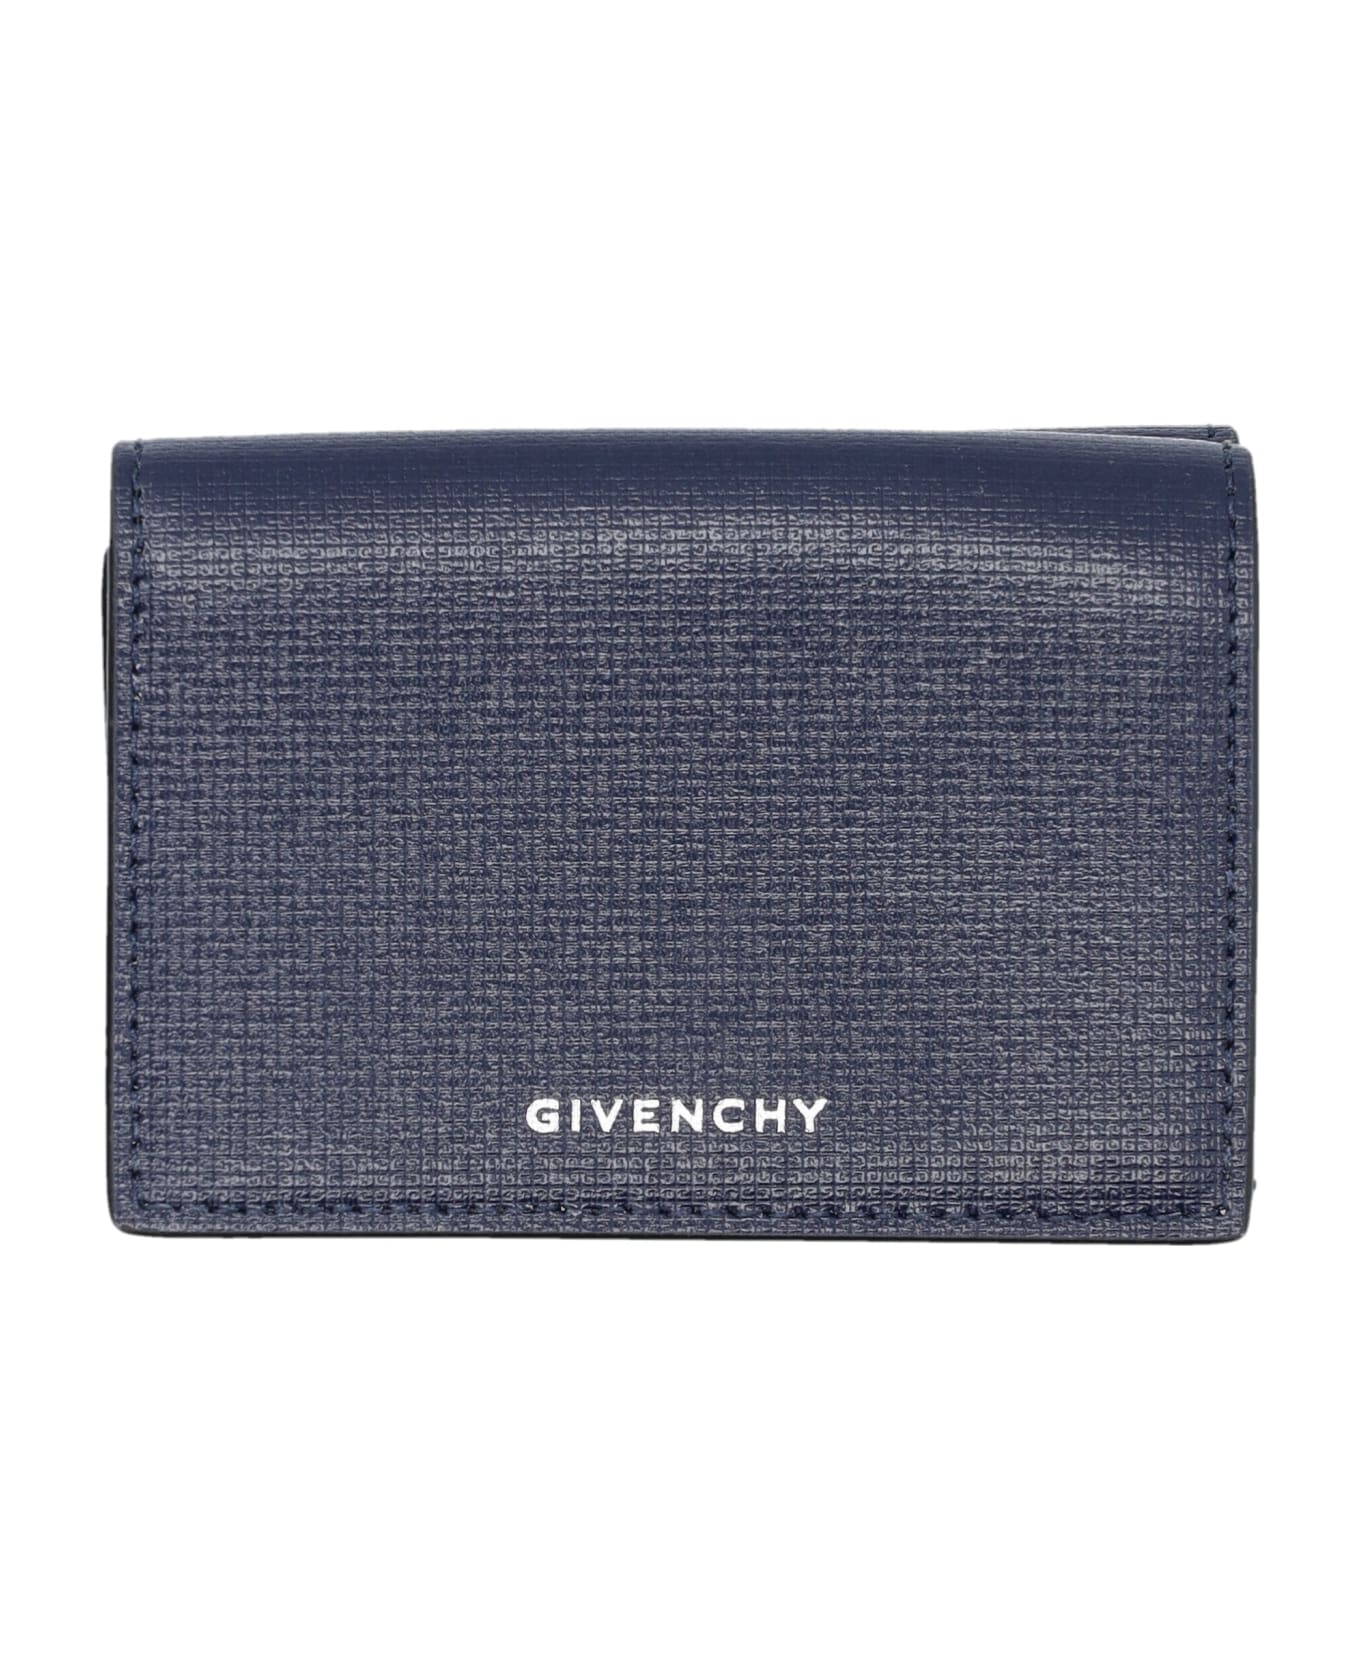 Givenchy Compact Wallet - NAVY/BLACK